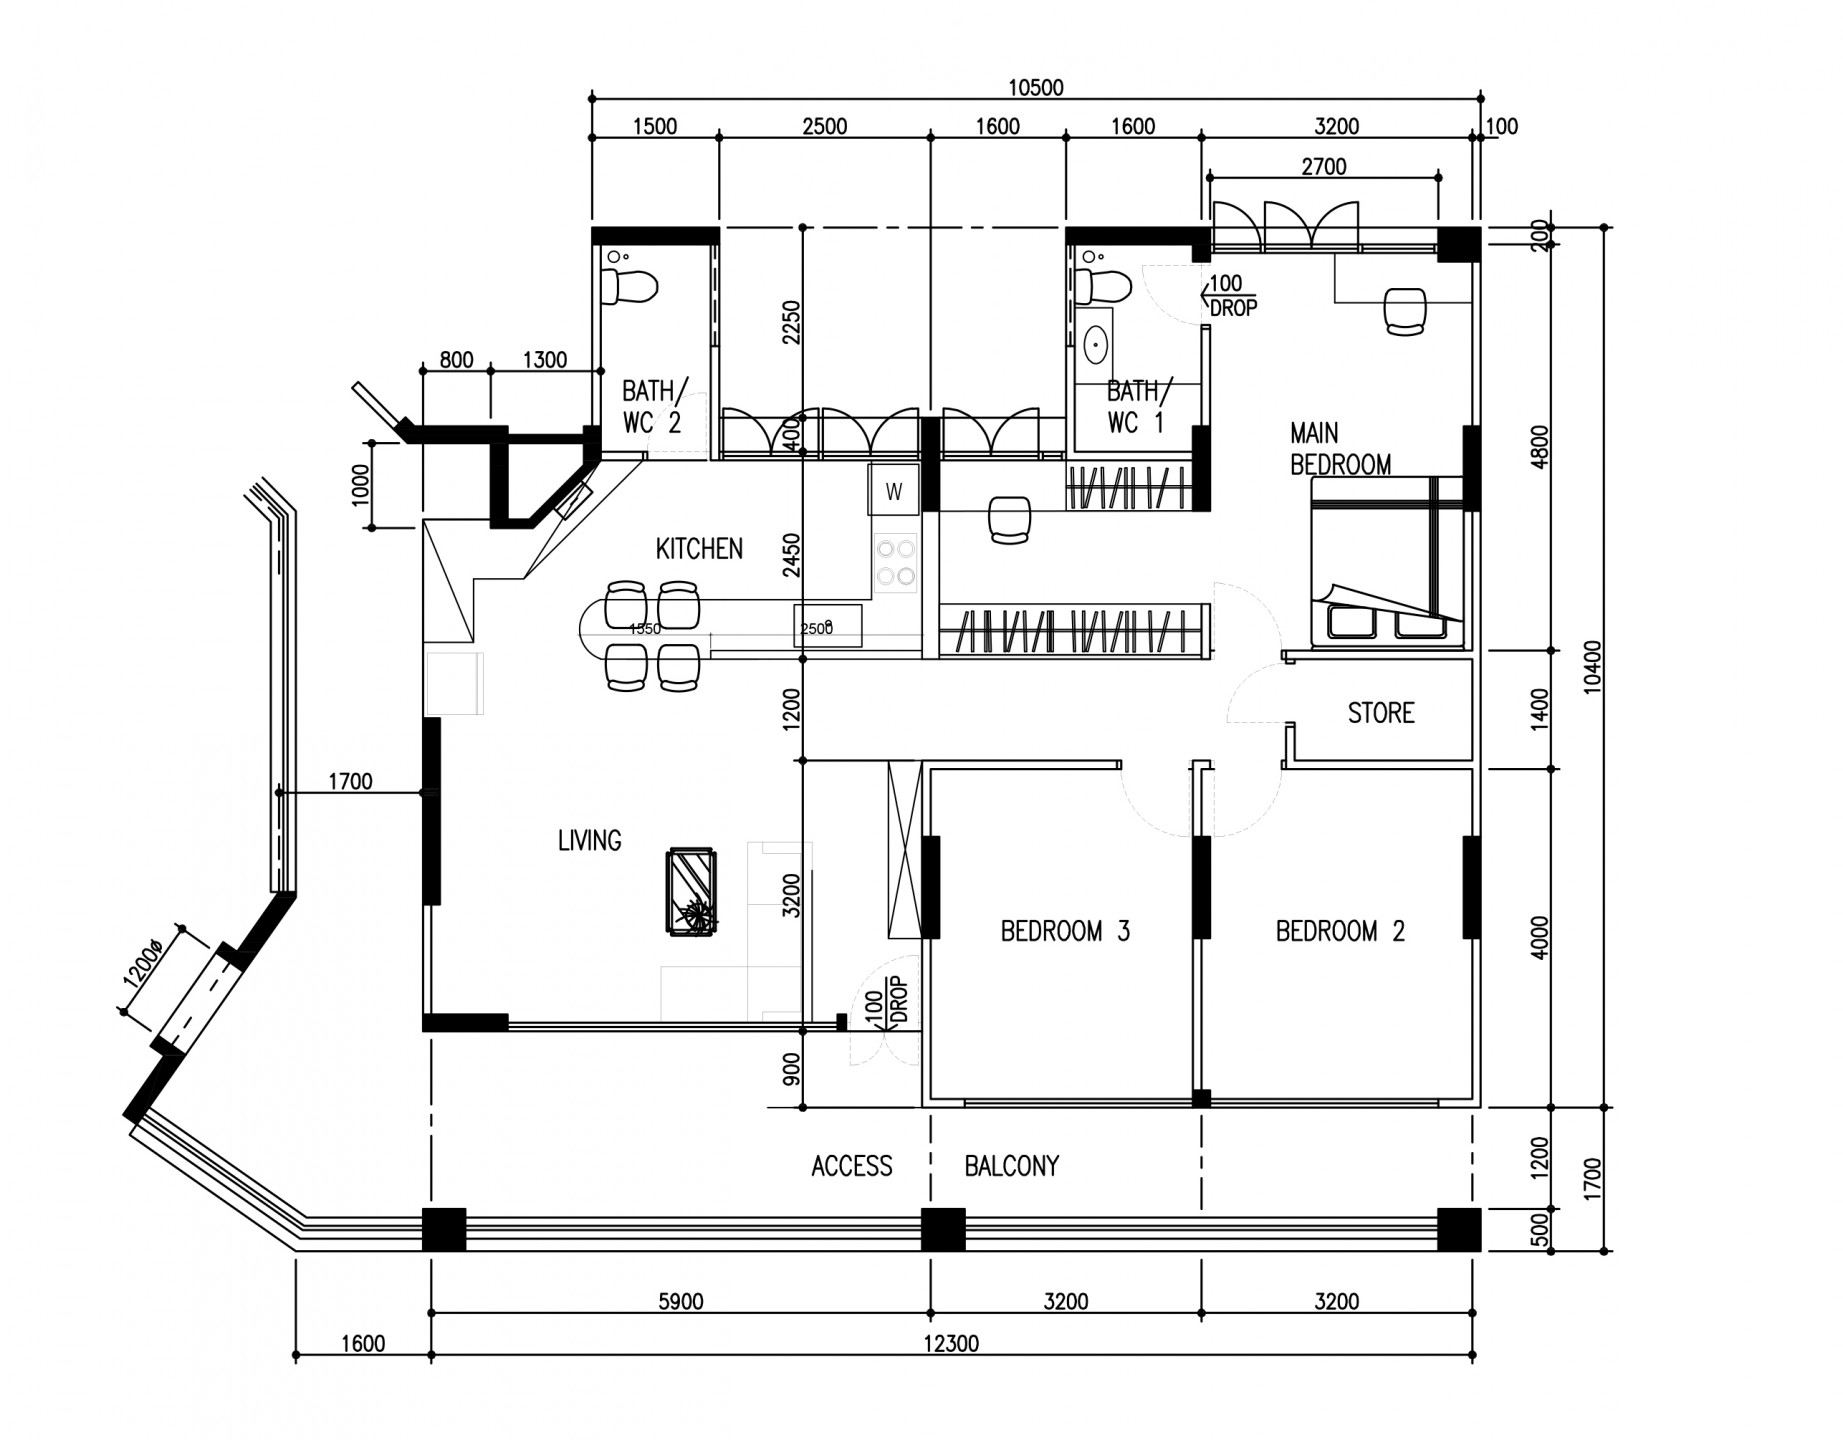 squarerooms ovon design tampines street 22 4 room hdb flat floor plan